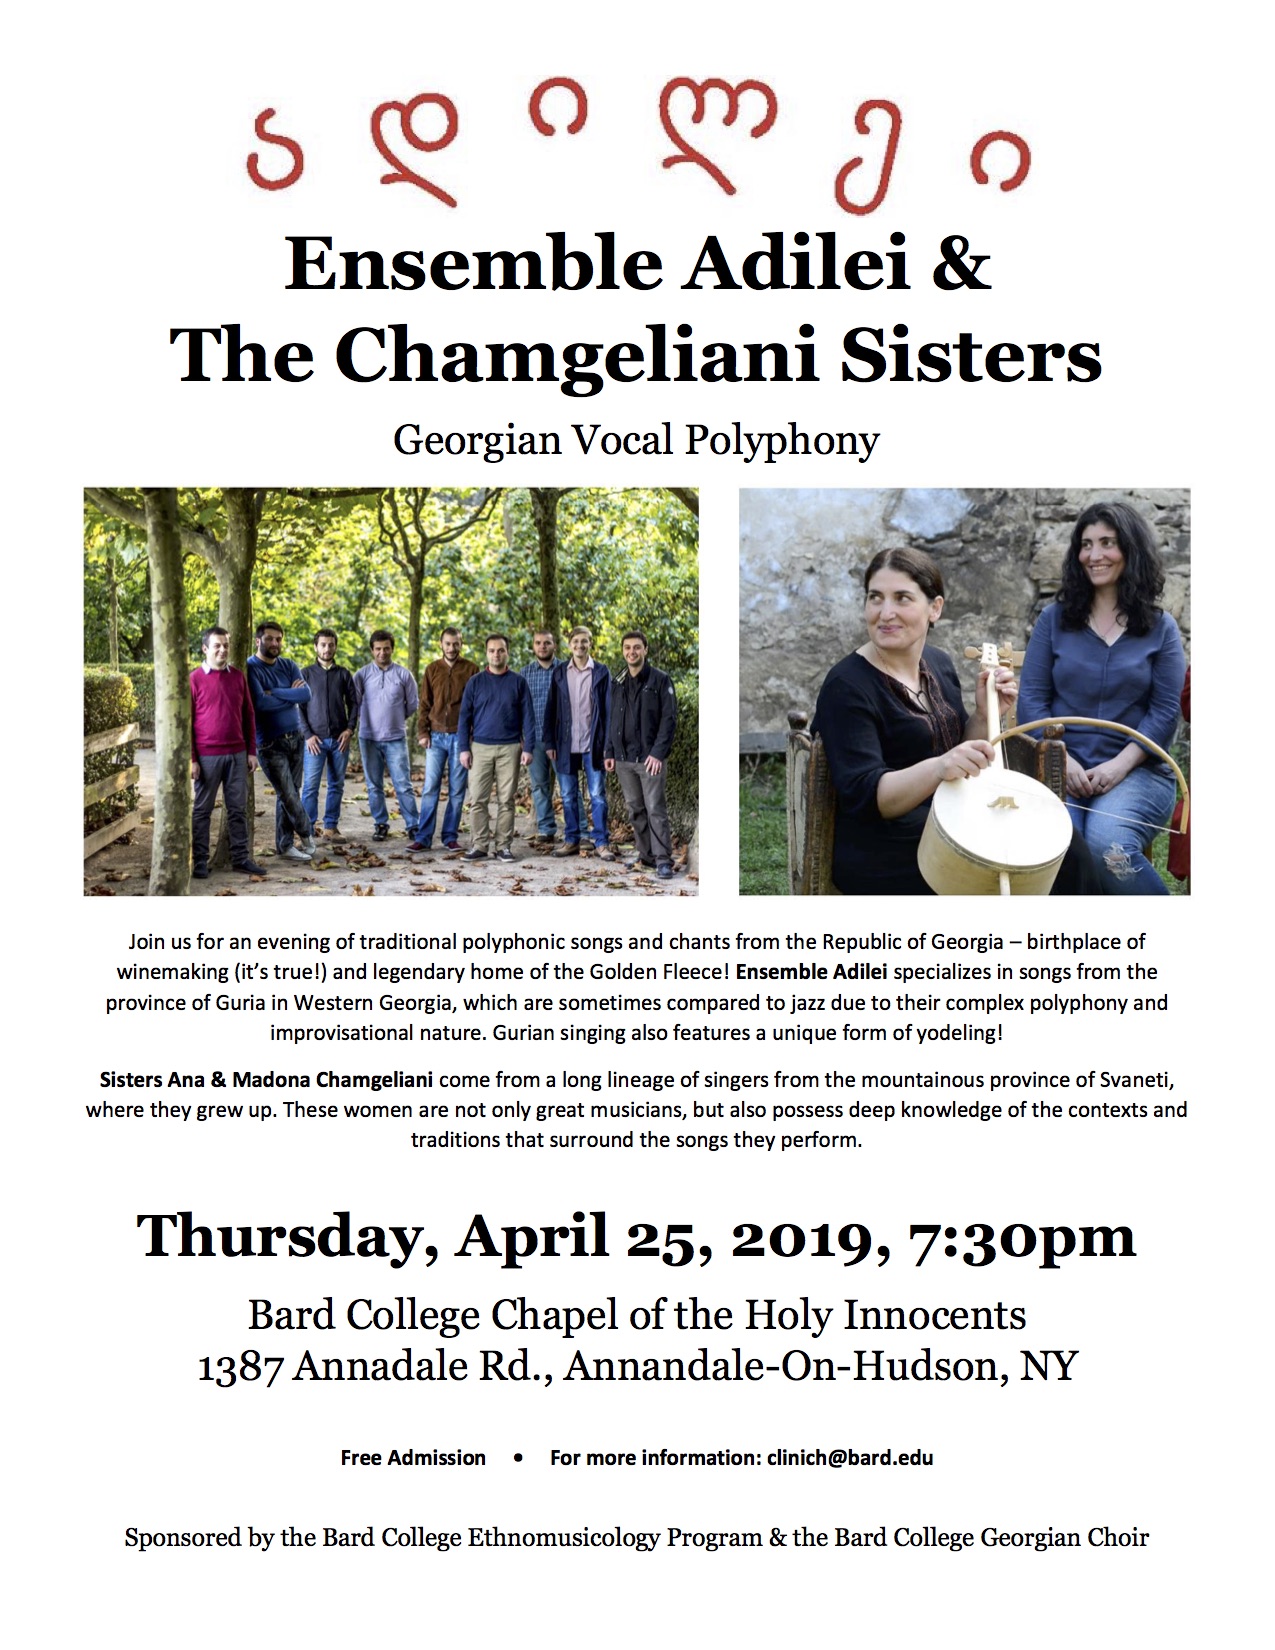 Ensemble Adilei and The Chamgeliani Sisters: Georgian vocal polyphony